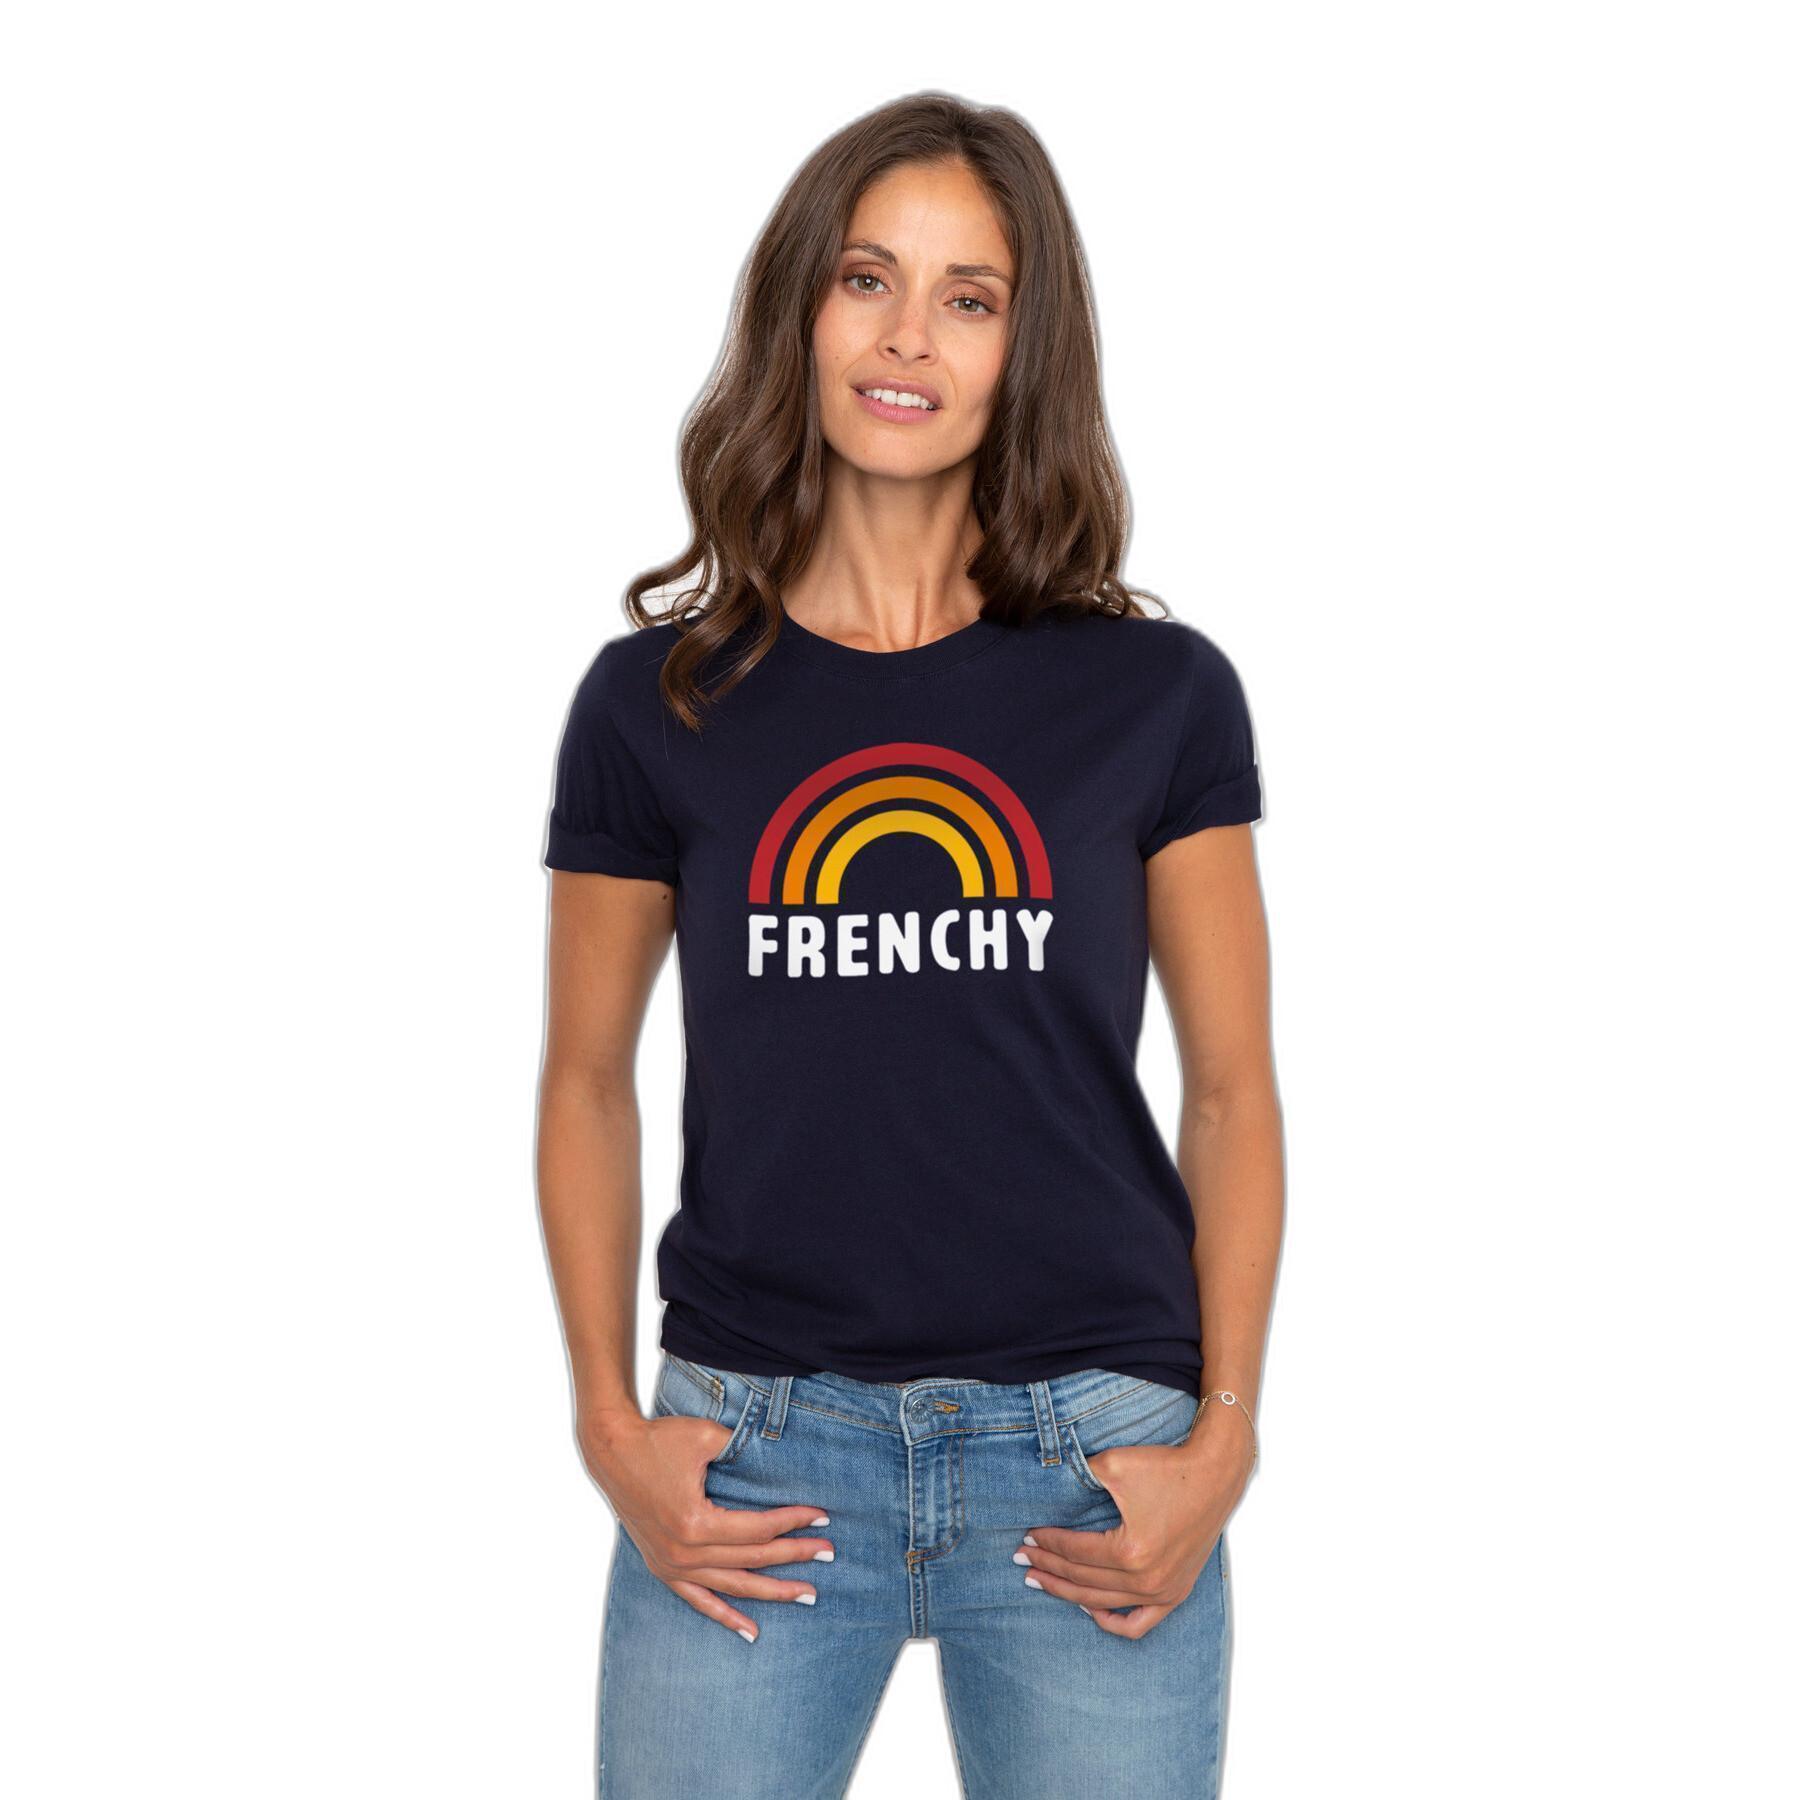 Women's T-shirt French Disorder Alex Frenchy